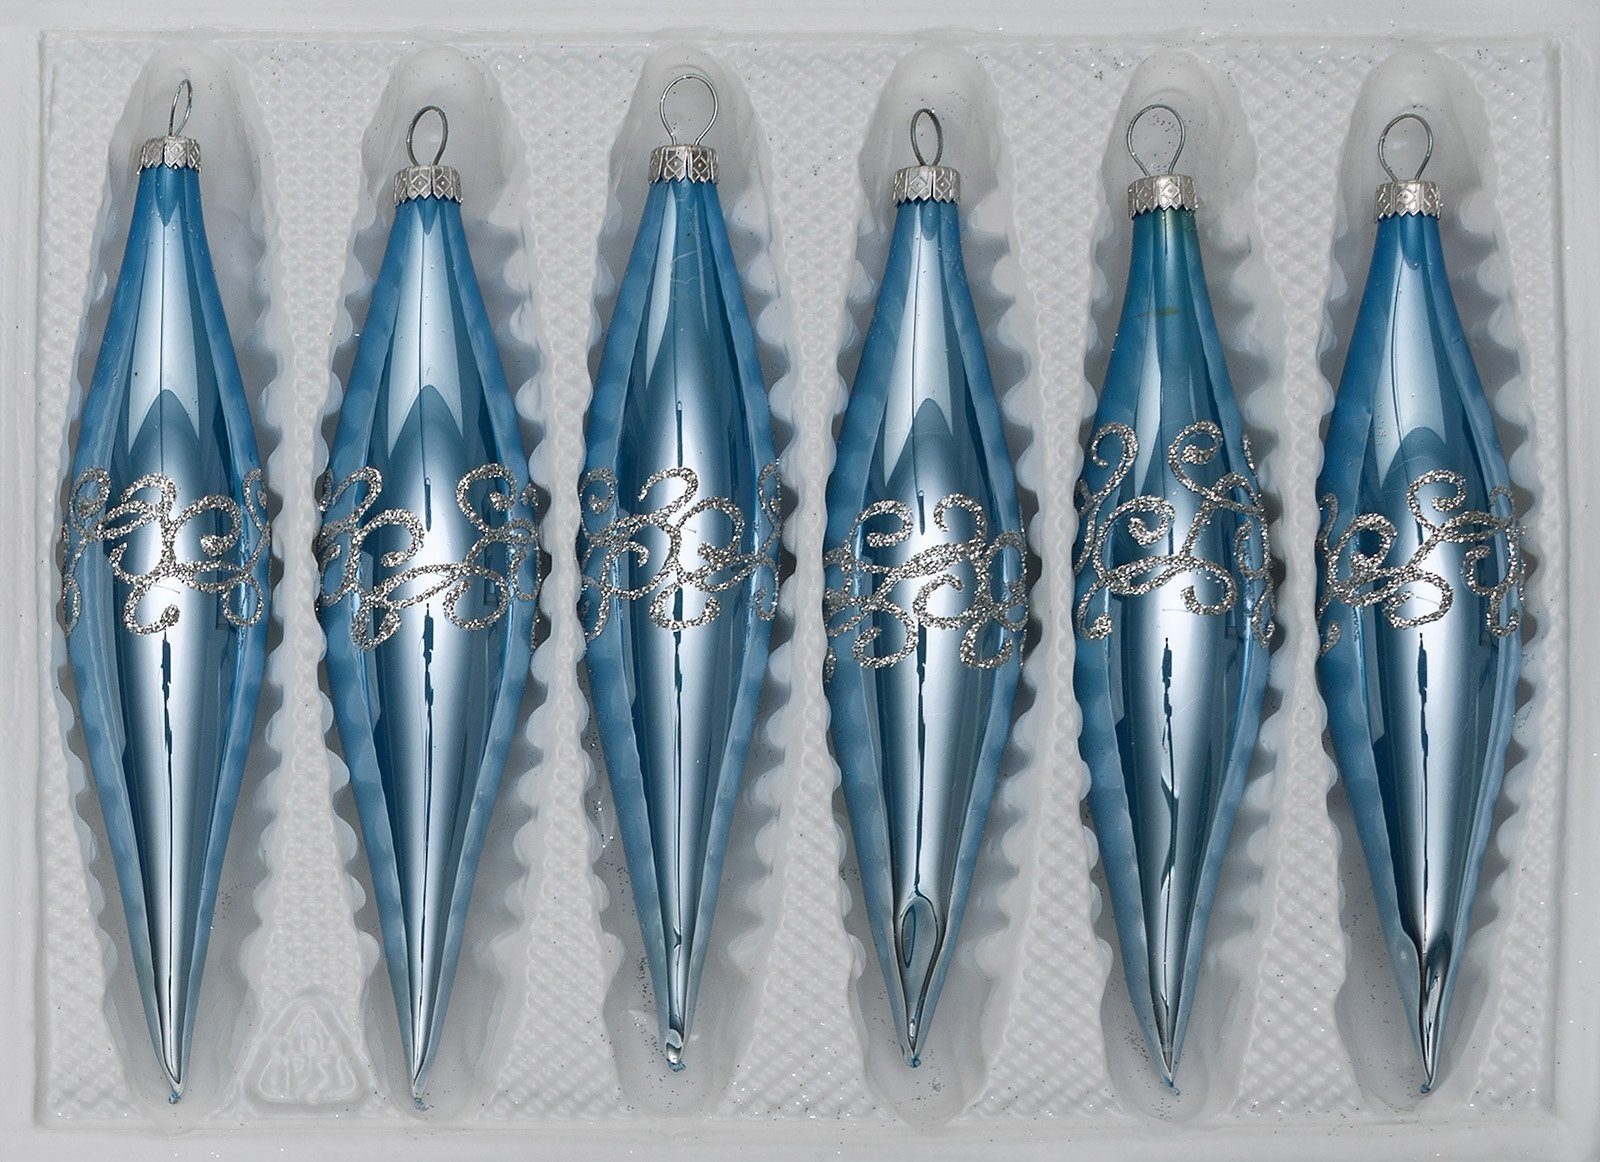 Navidacio Christbaumschmuck 6 tlg. Glas-Zapfen Set in "Hochglanz-Blau-Silberne-Ornamente“ | Dekohänger